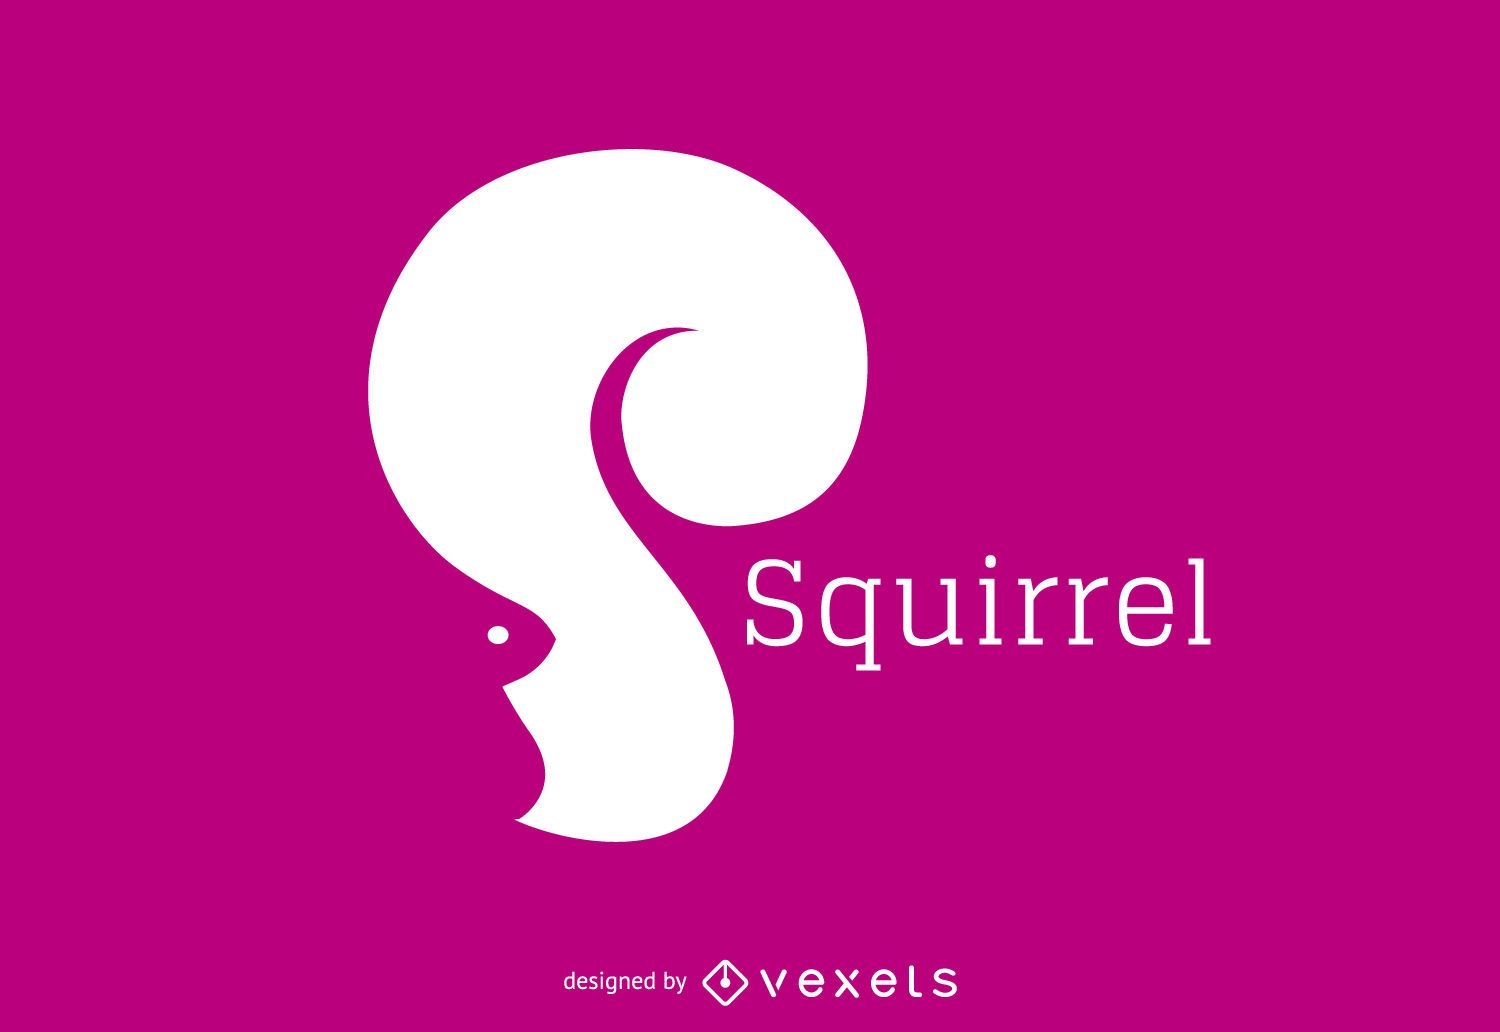 Squirrel silhouette logo template